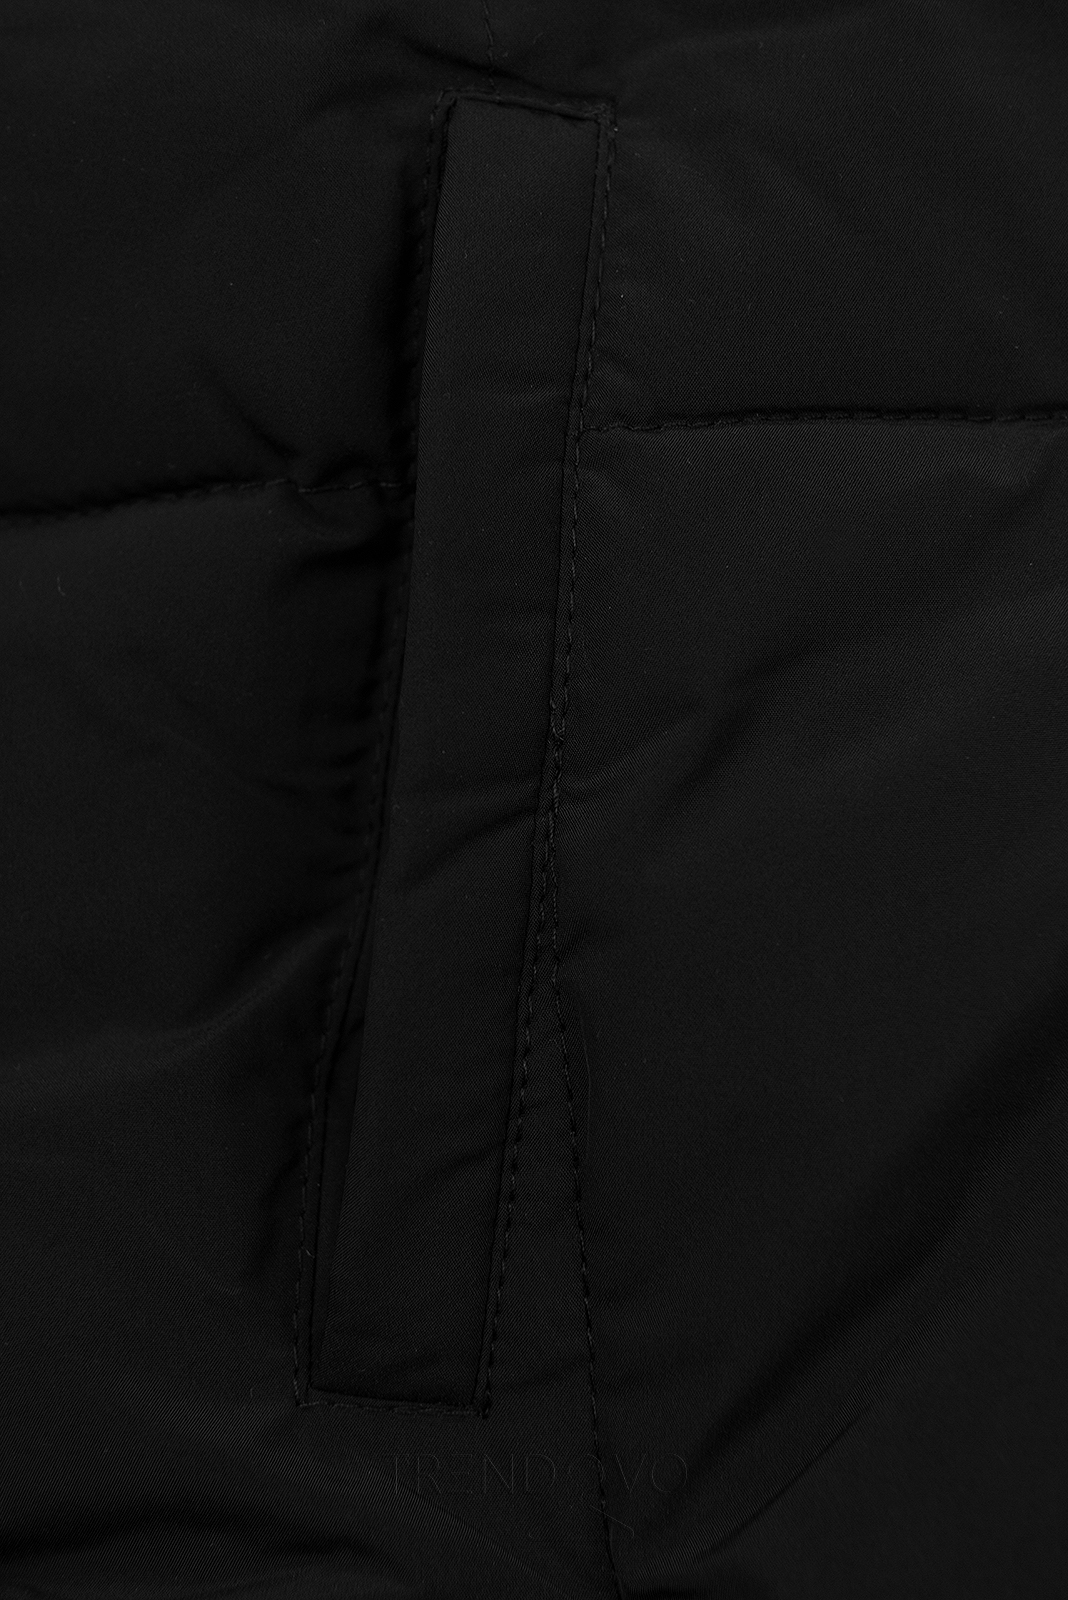 Čierna zimná bunda 2 v 1